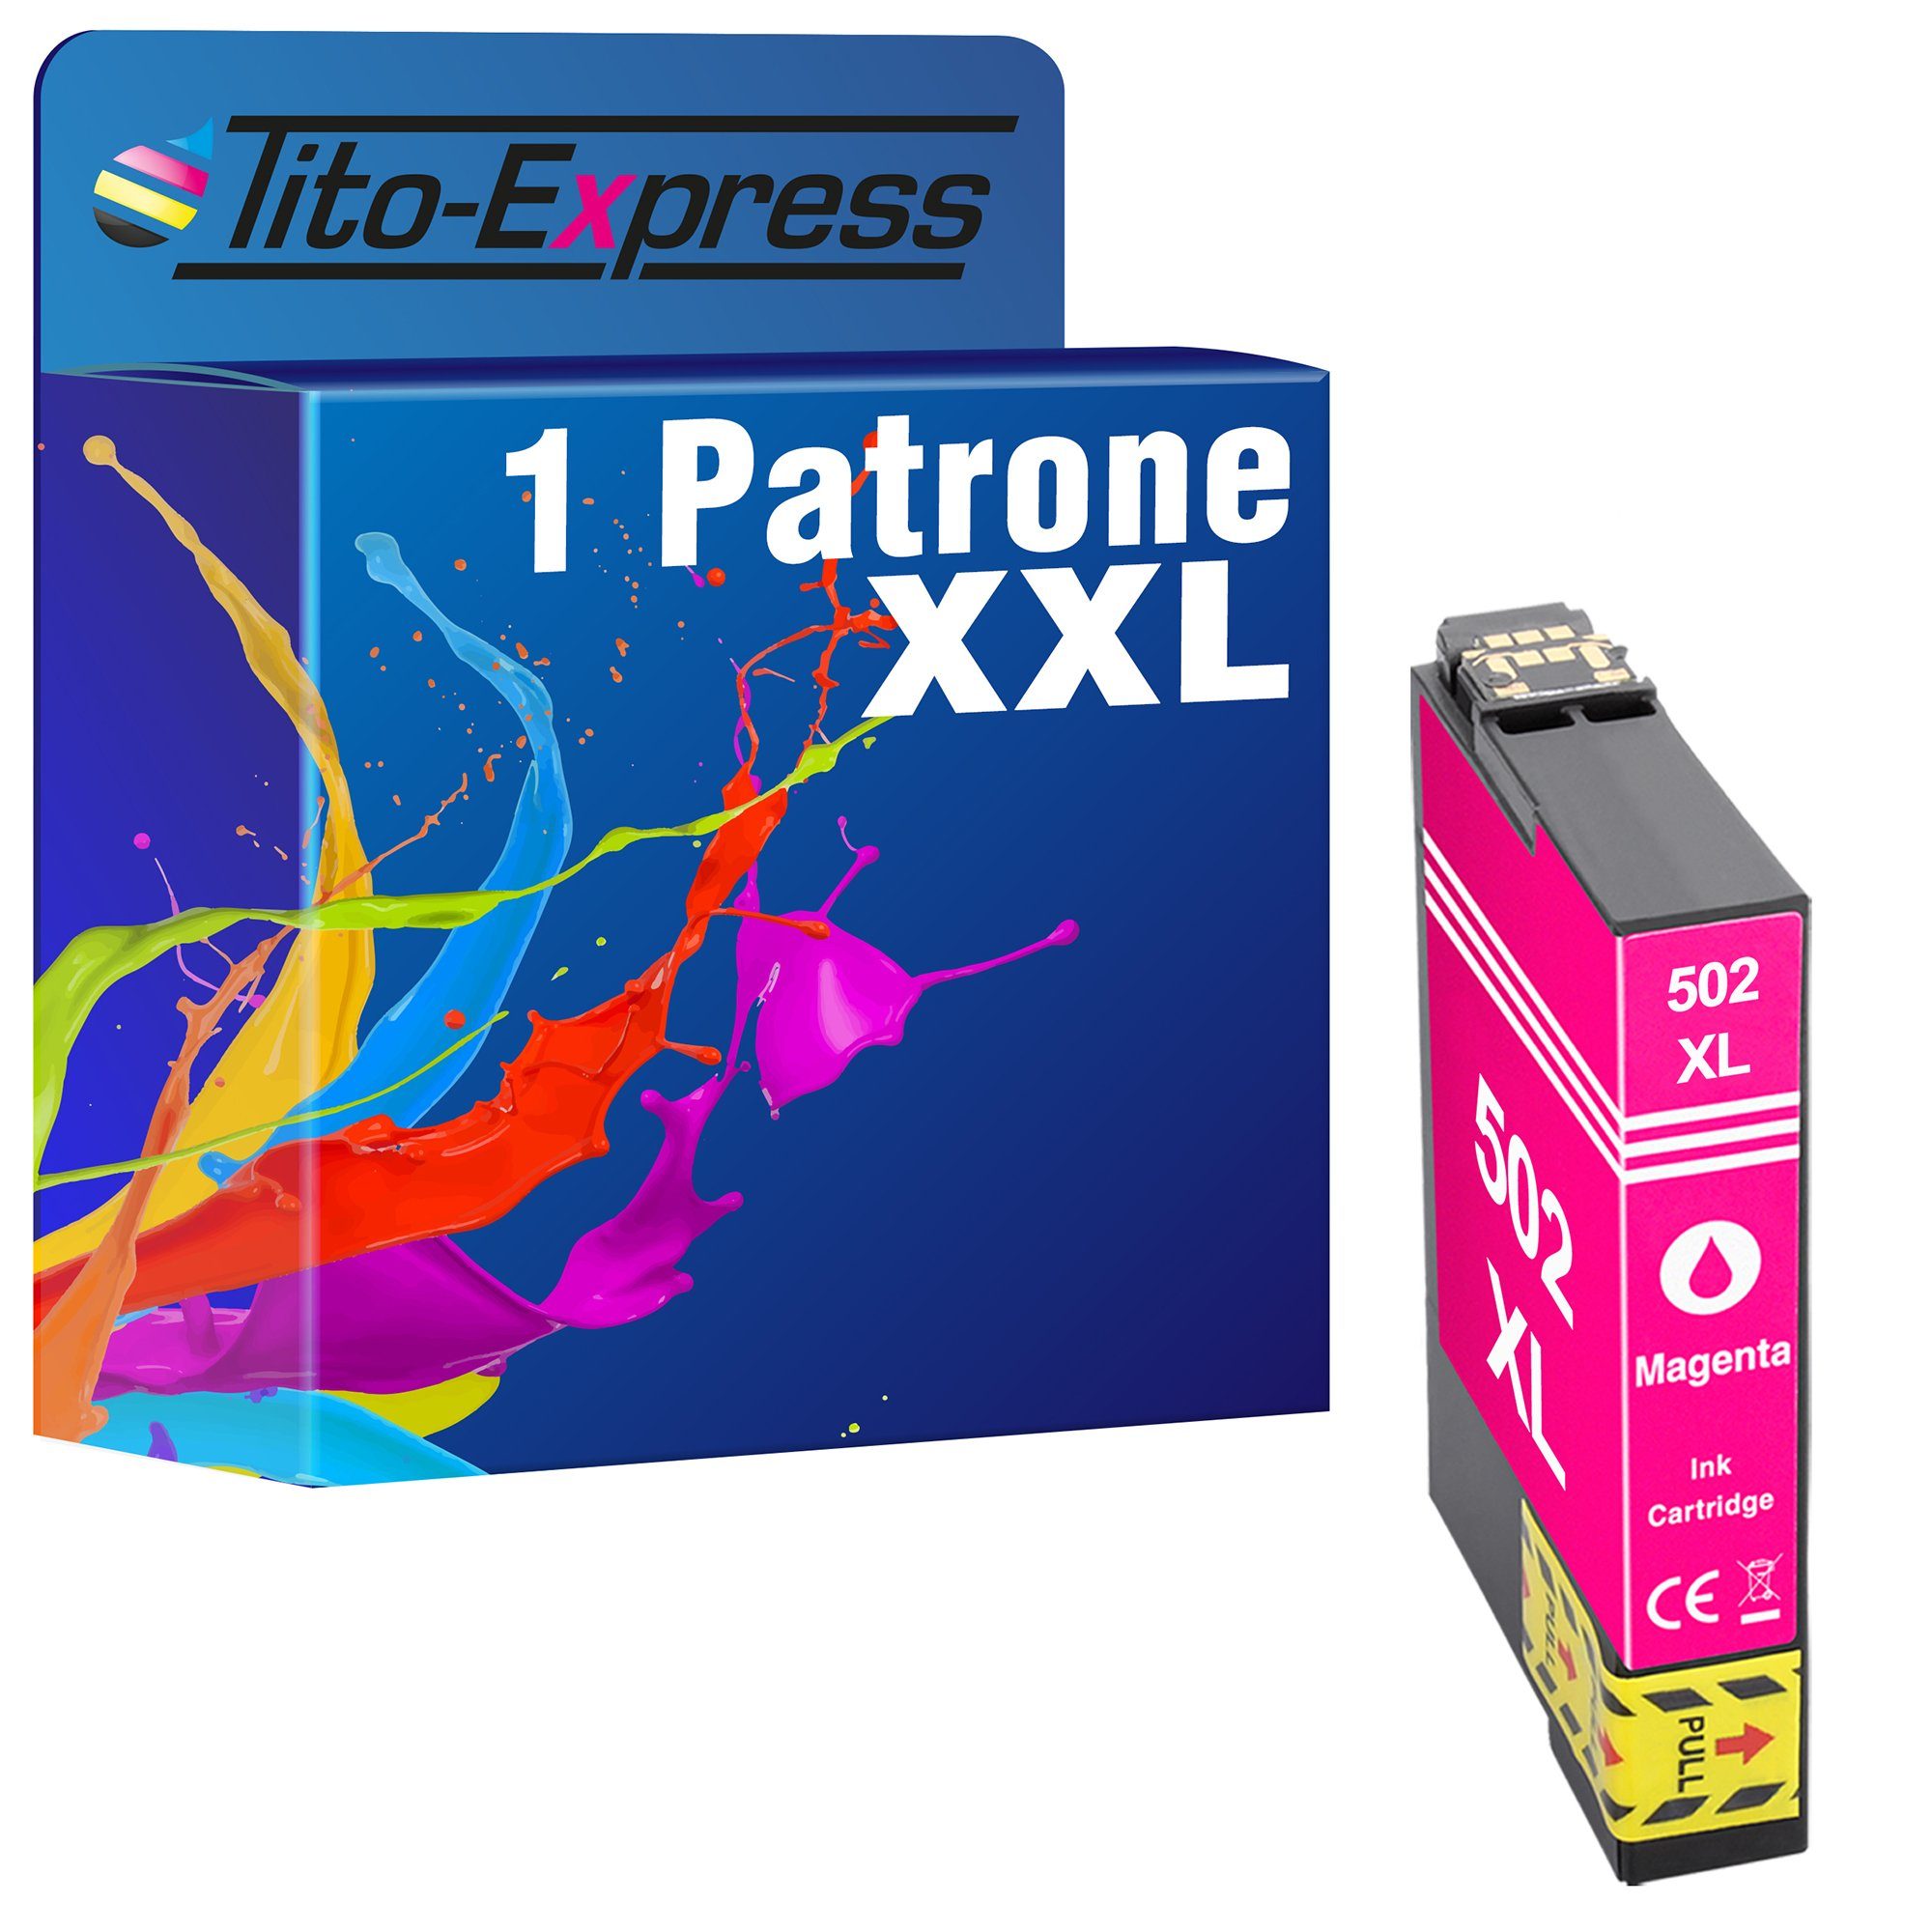 XP5105) ersetzt Epson XP-5105 XP5100 Tintenpatrone 502 WF-2865 DWF Tito-Express (für XL XP-5100 WF-2860DWF WF-2860 502XL Magenta